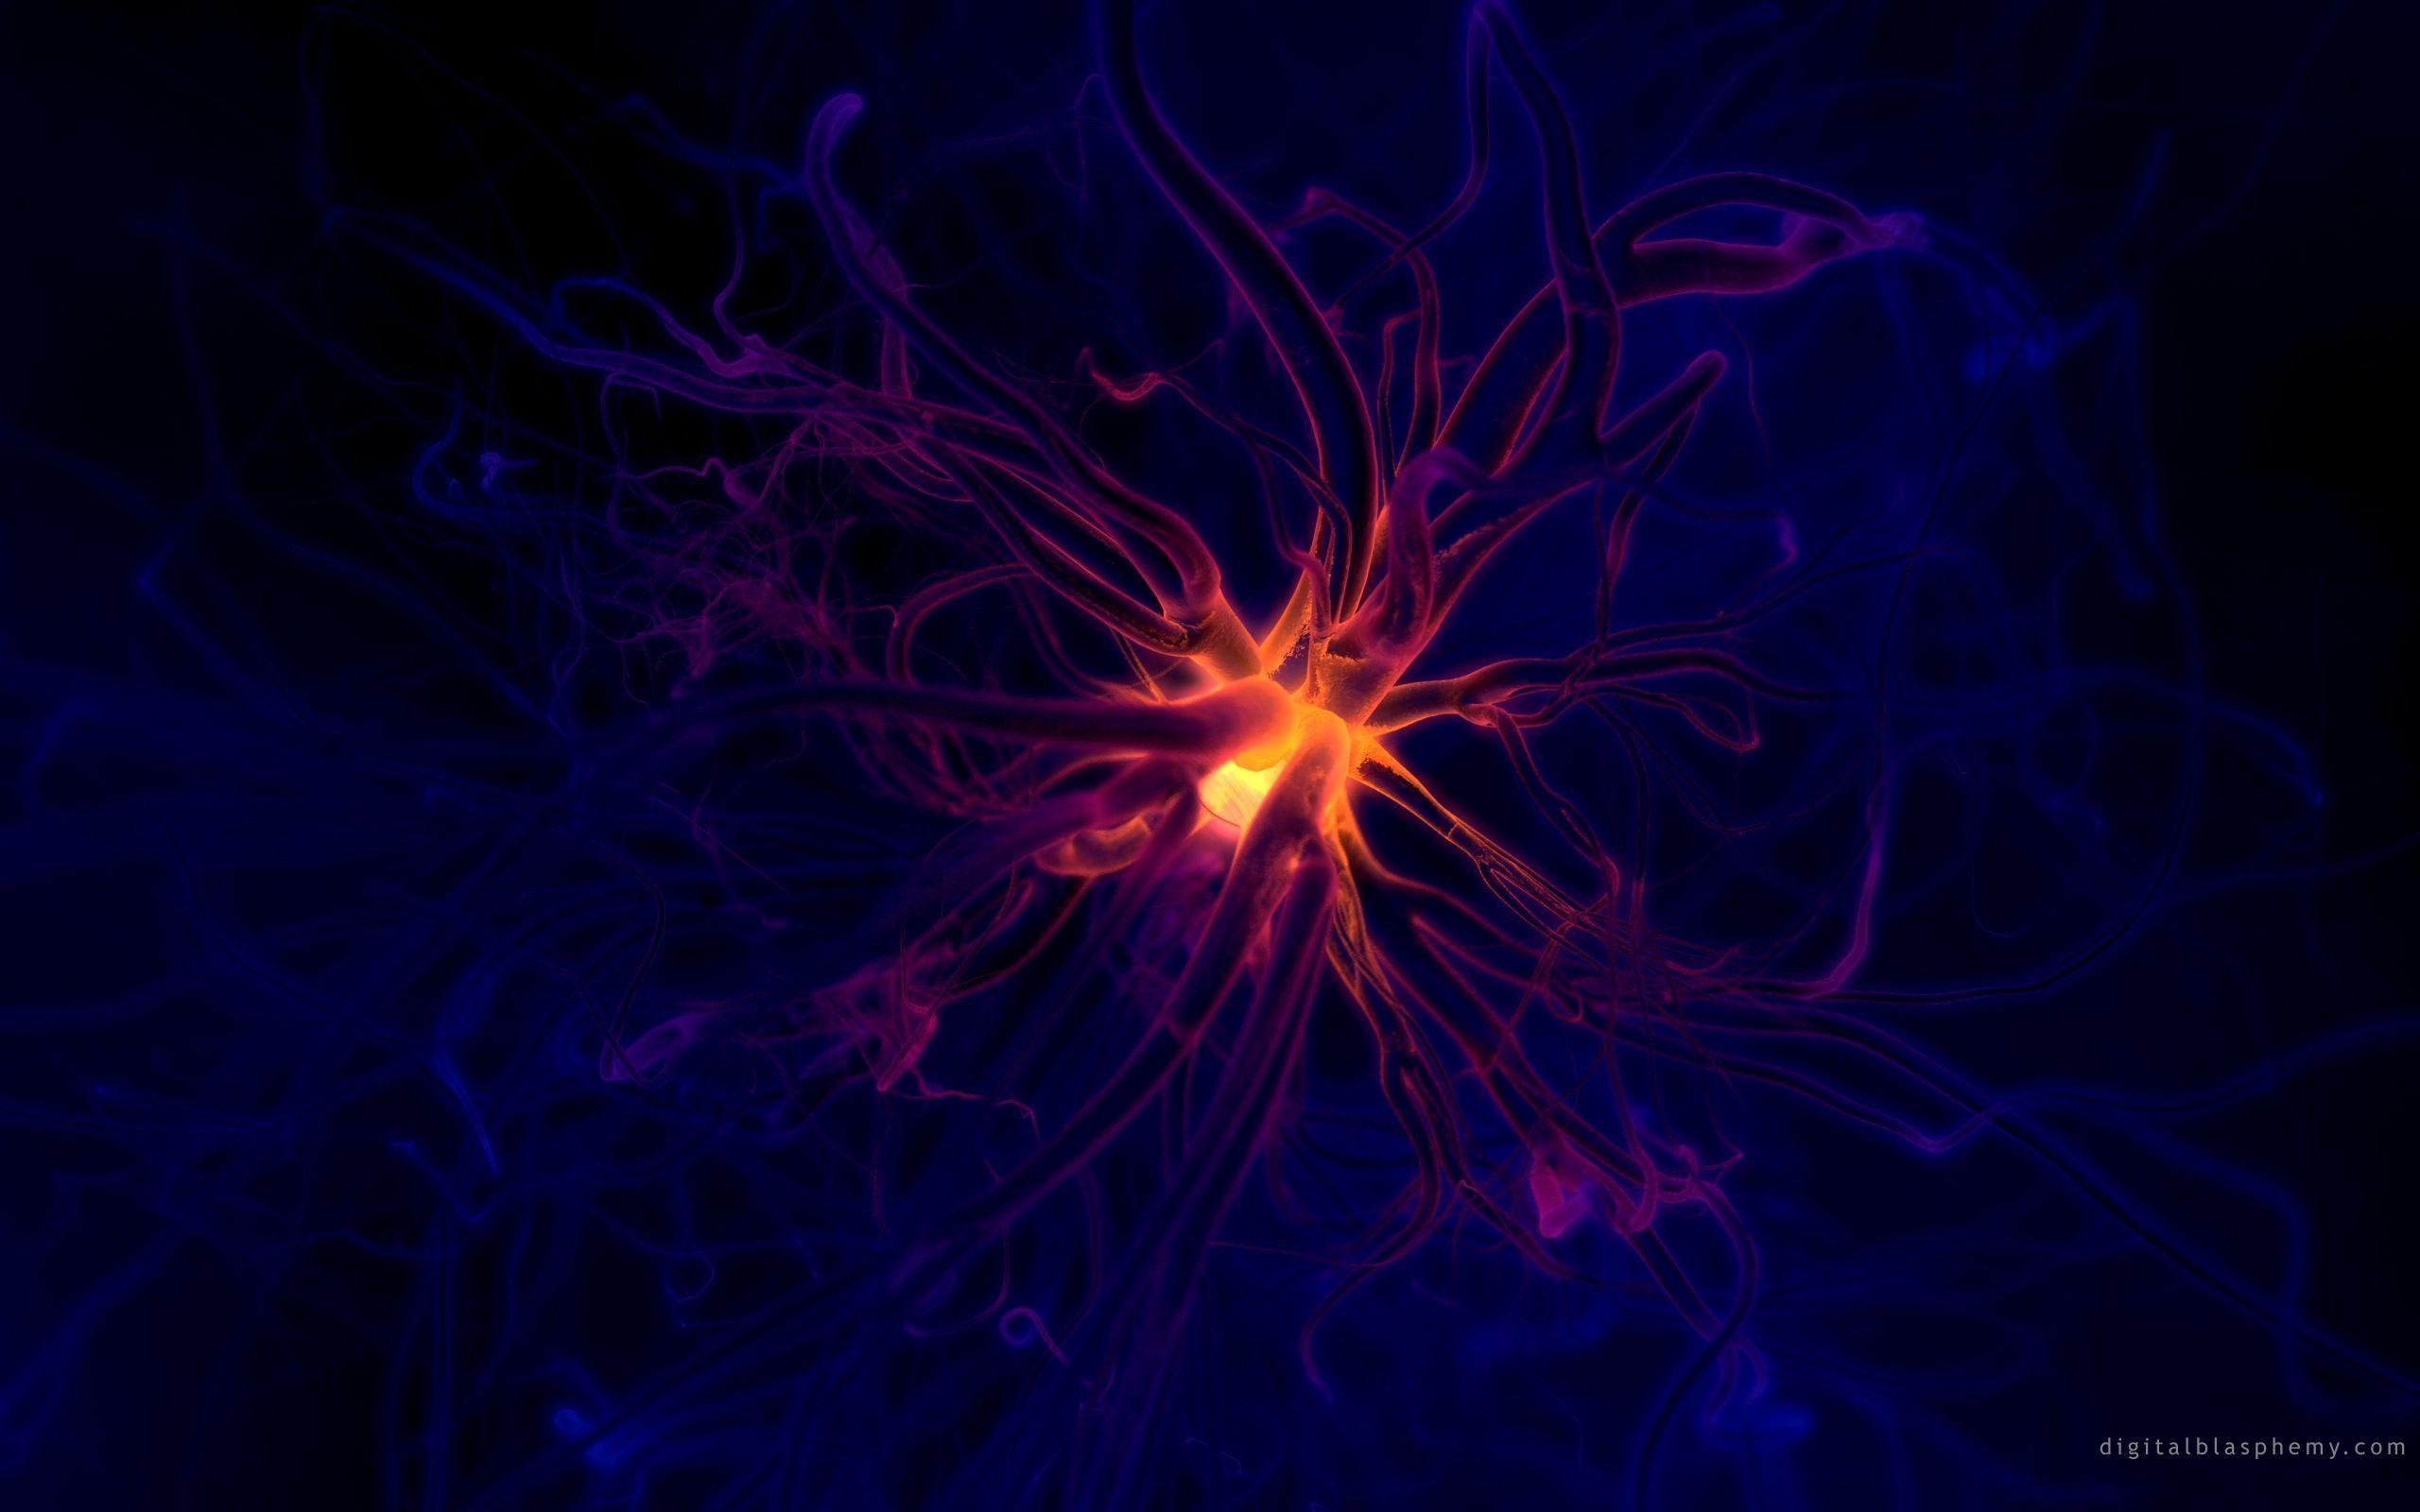 Neuron. Digital Blasphemy. 2560 x 1600. 589KB. Digital